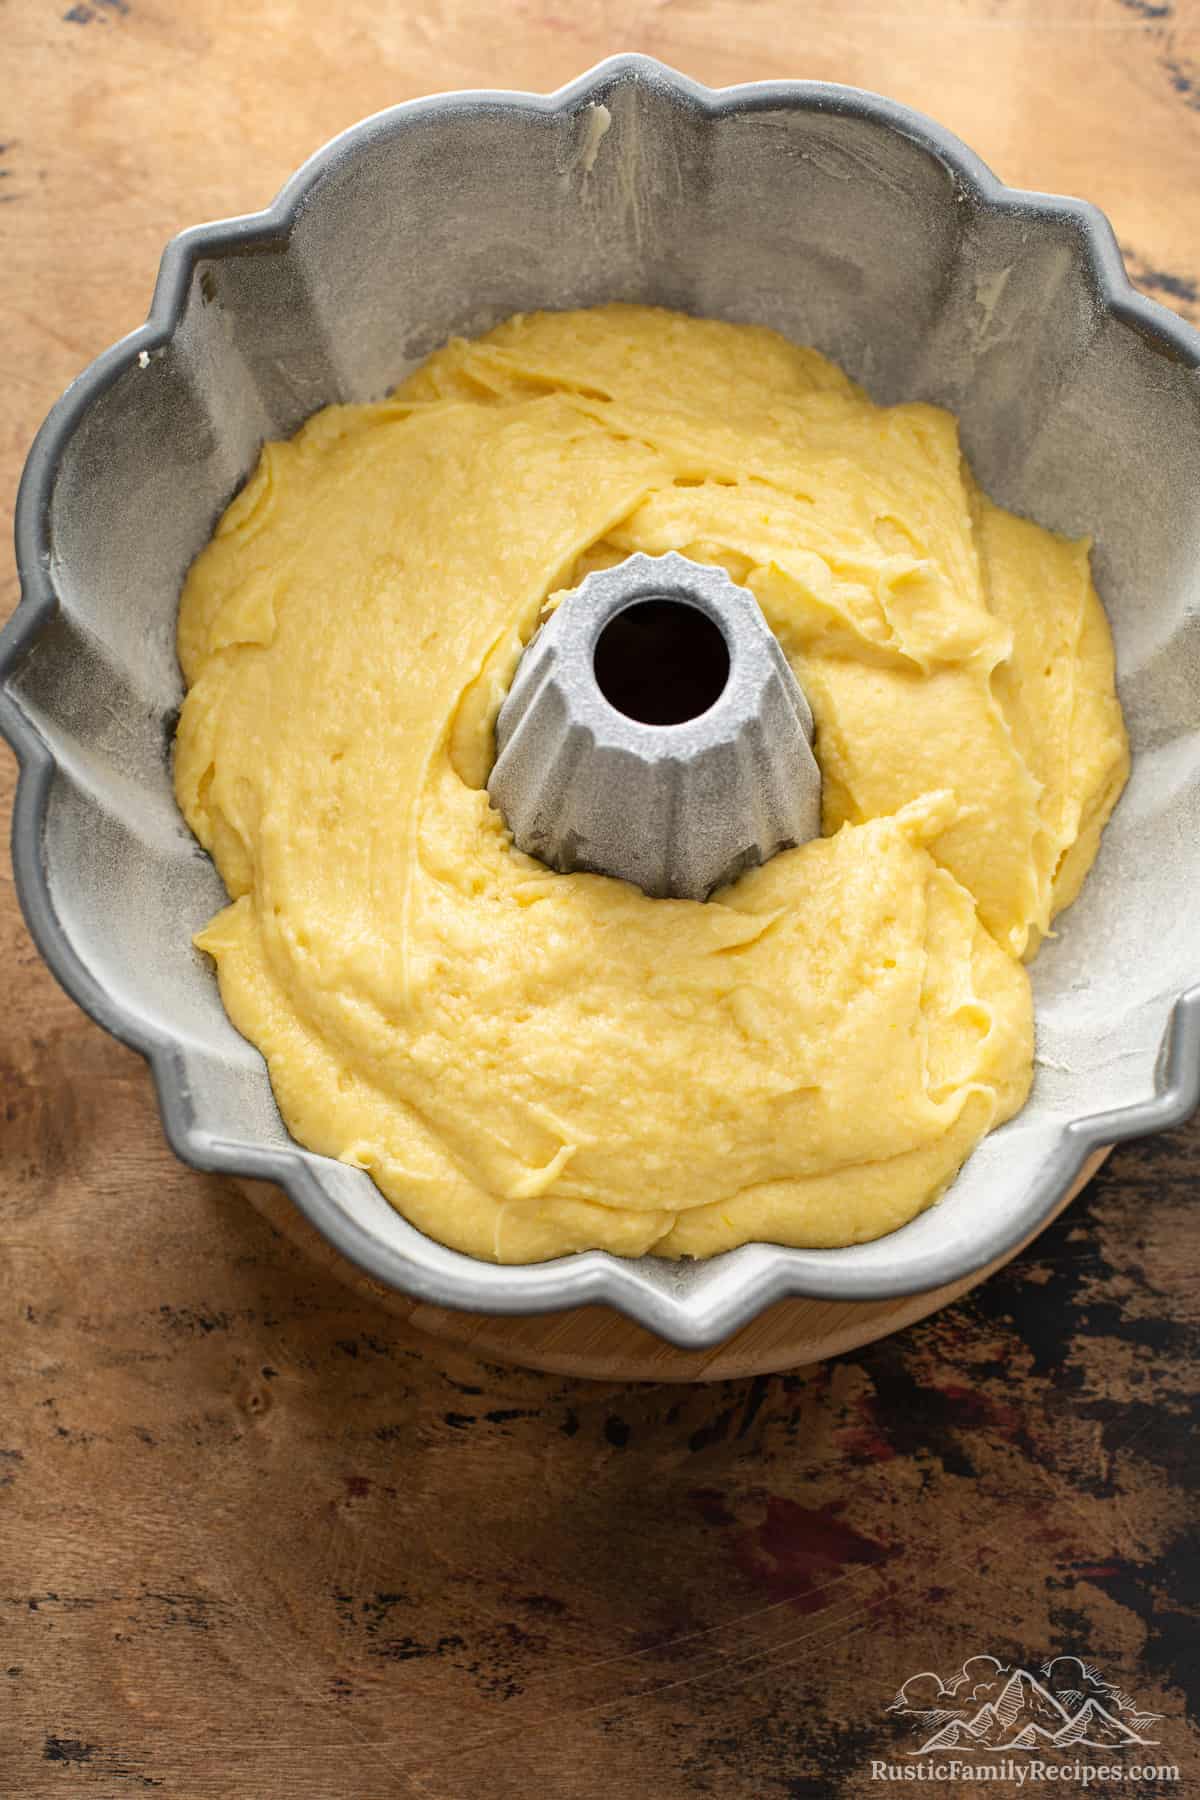 Vanilla cake batter in a bundt pan.